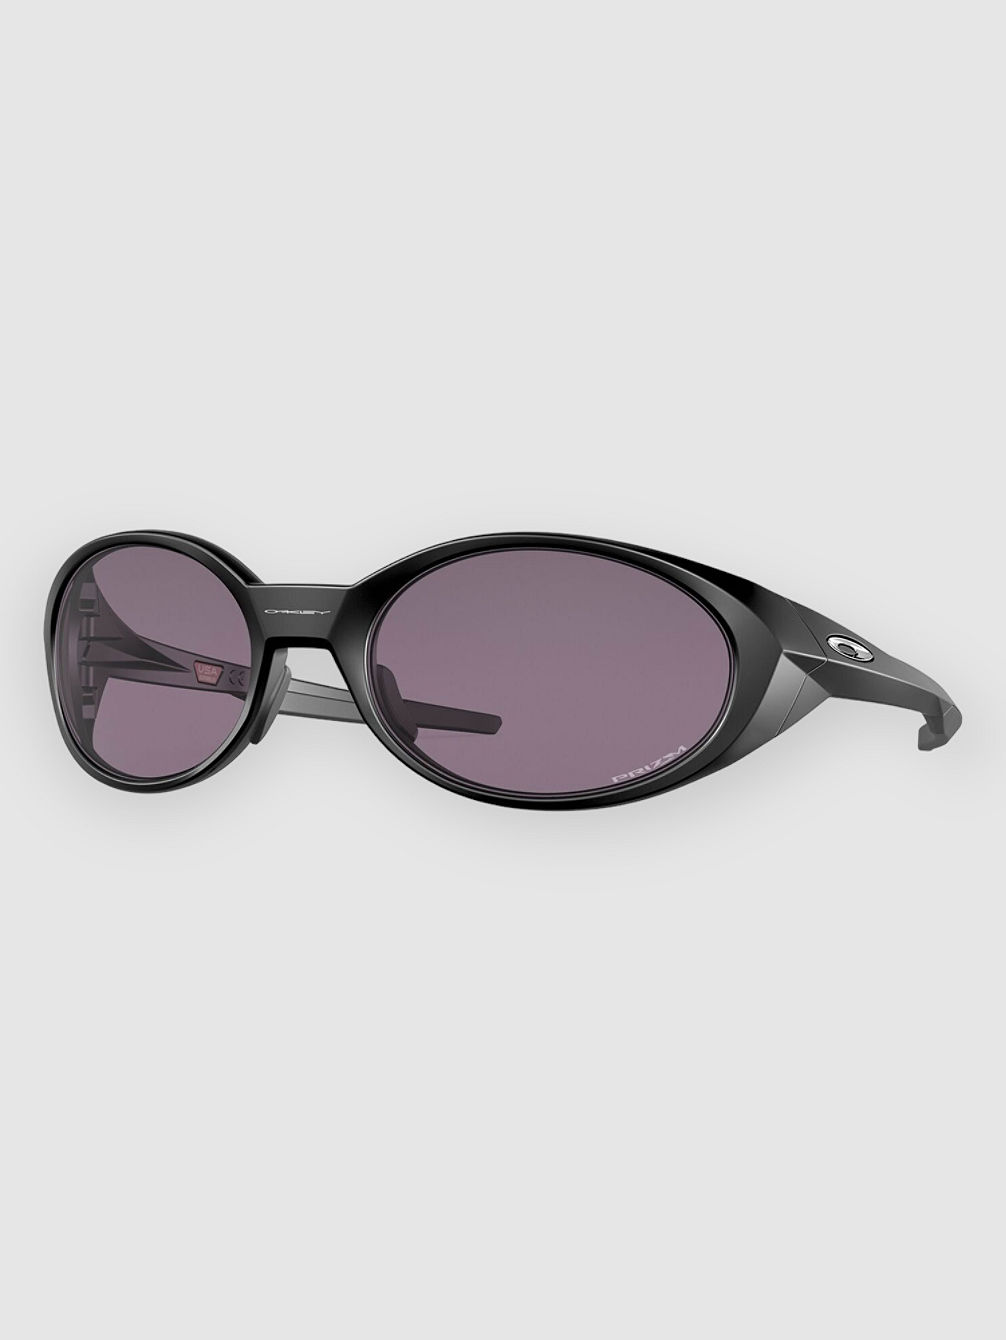 Eyejacket Redux Matte Black Sunglasses